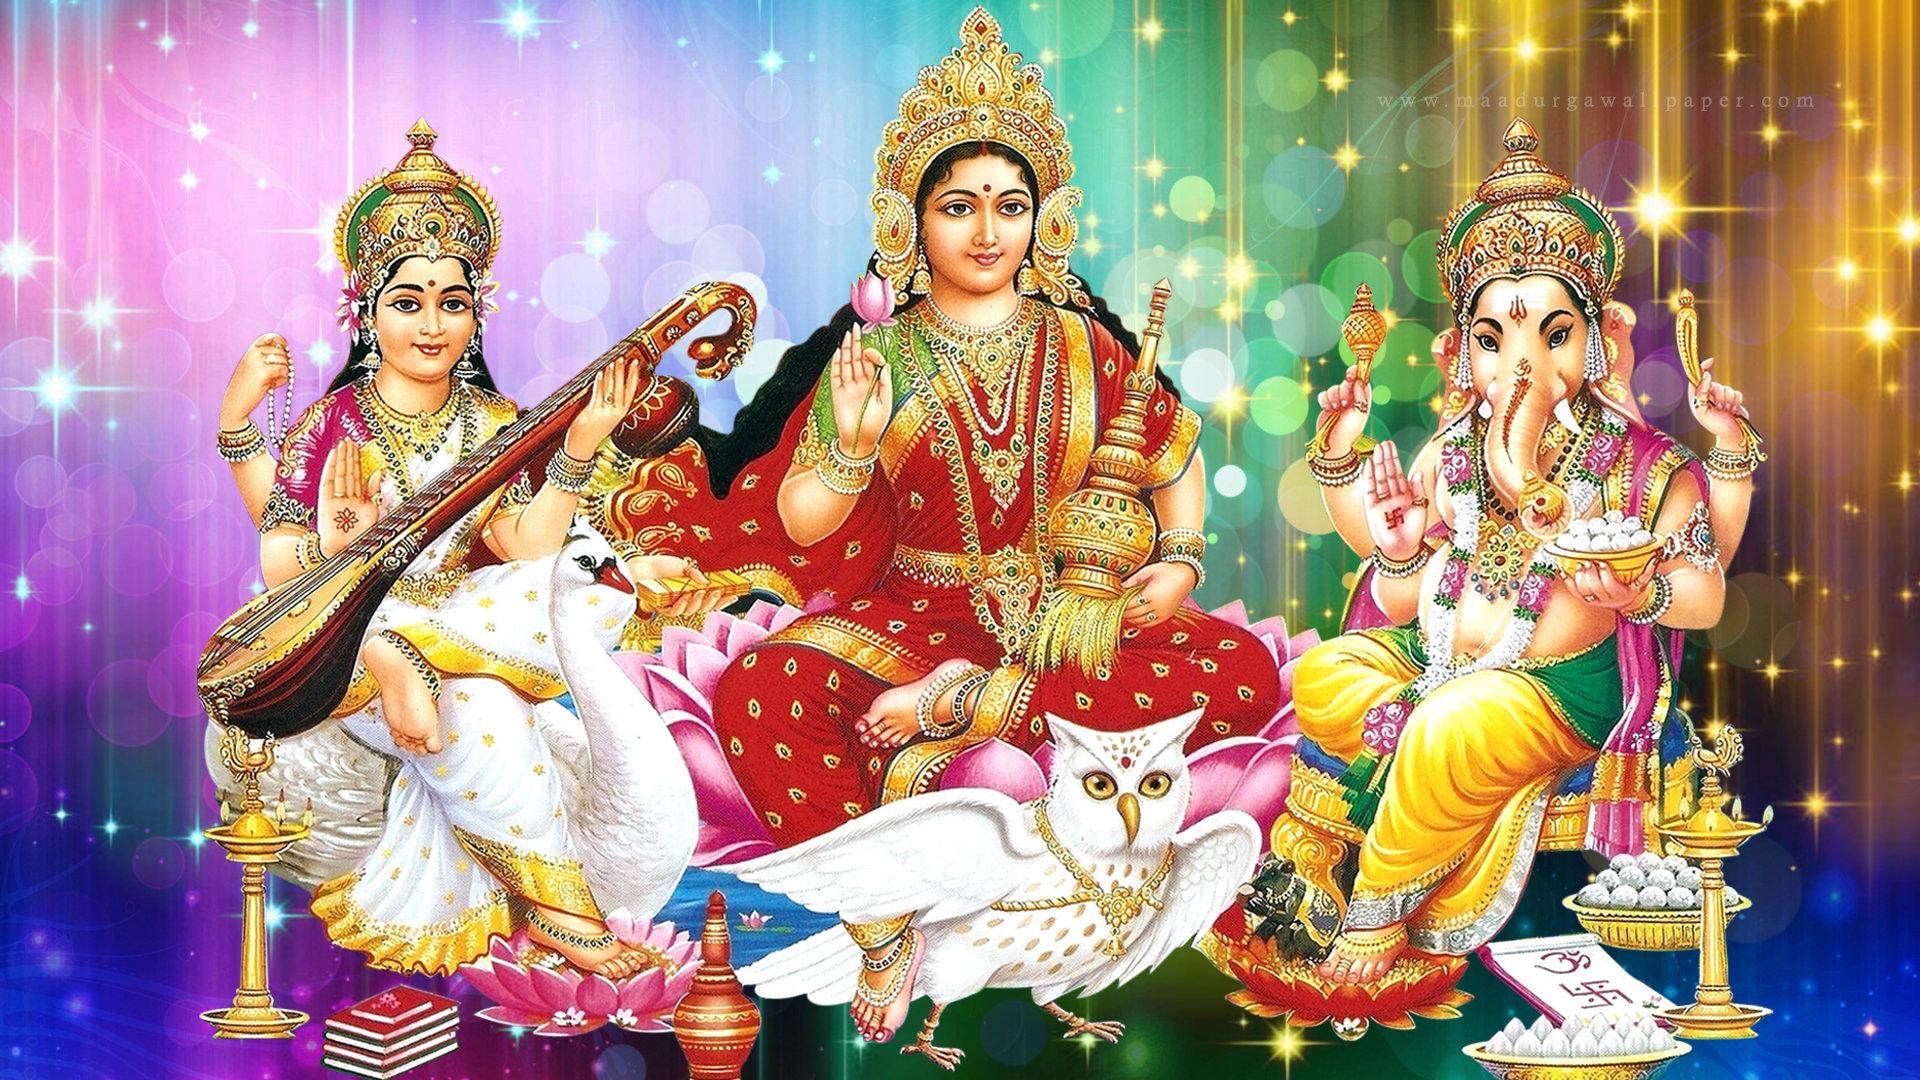 Mata Laxmi Wallpaper, image & Goddess Lakshmi photo download